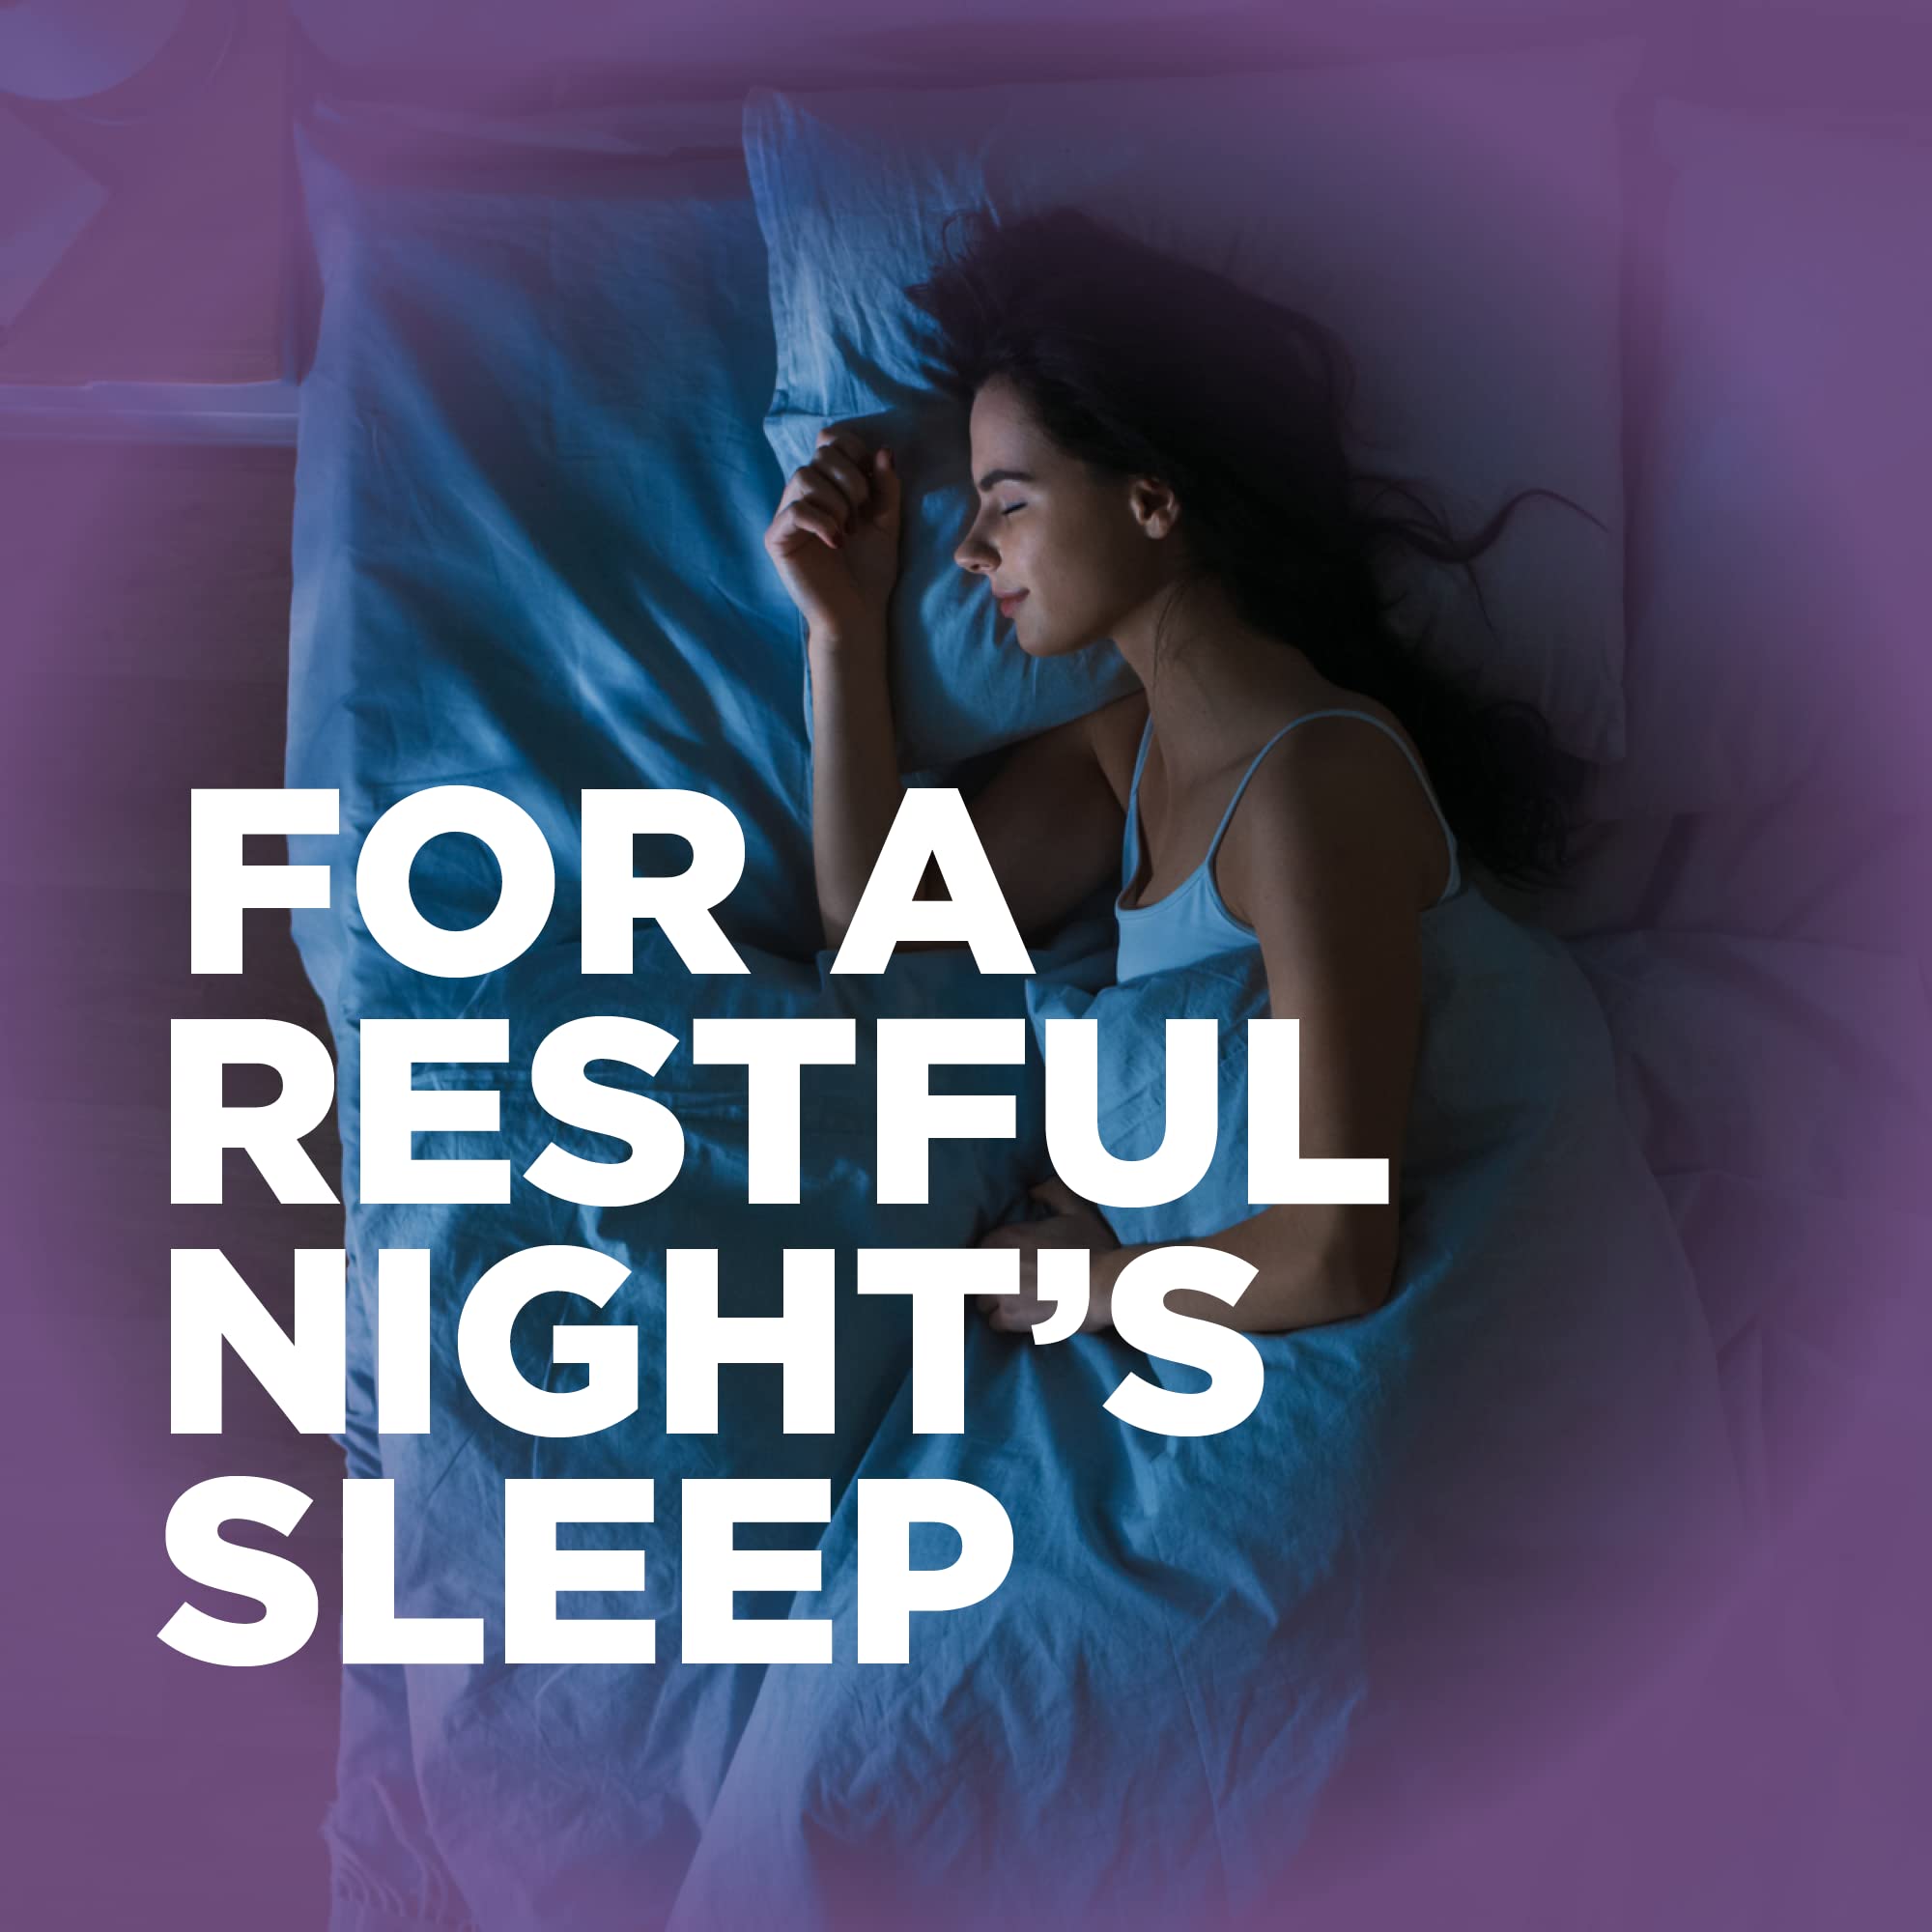 Amazon Basic Care Night Time Sleep-Aid Liquid, Helps You Fall Asleep, Relieves Occasional Sleeplessness, Berry Flavor, 12 Fluid Ounces